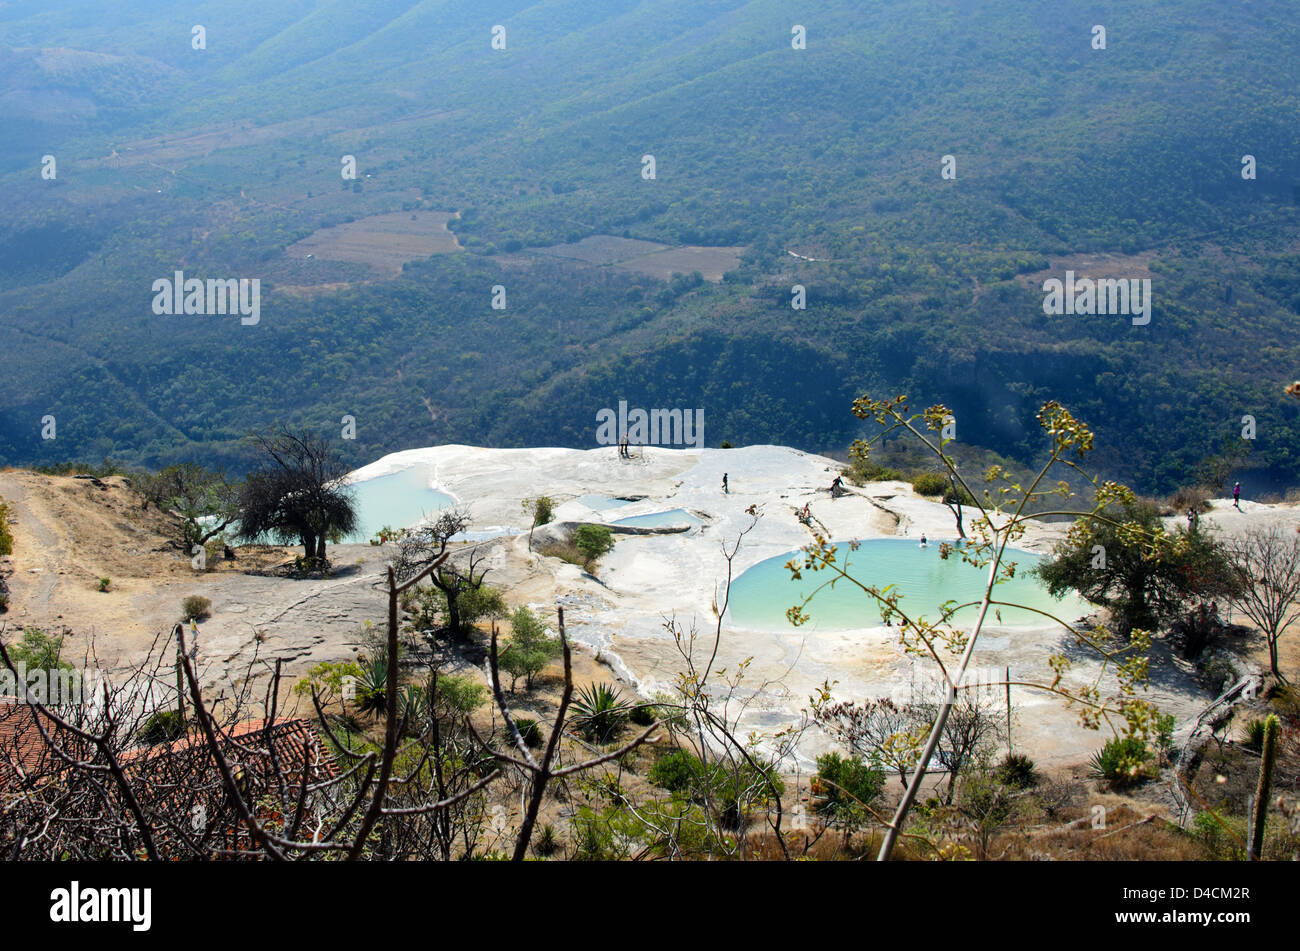 Natürliche Schwimmbäder in Hierve el Agua Mineral Springs, Oaxaca, Mexiko. Stockfoto